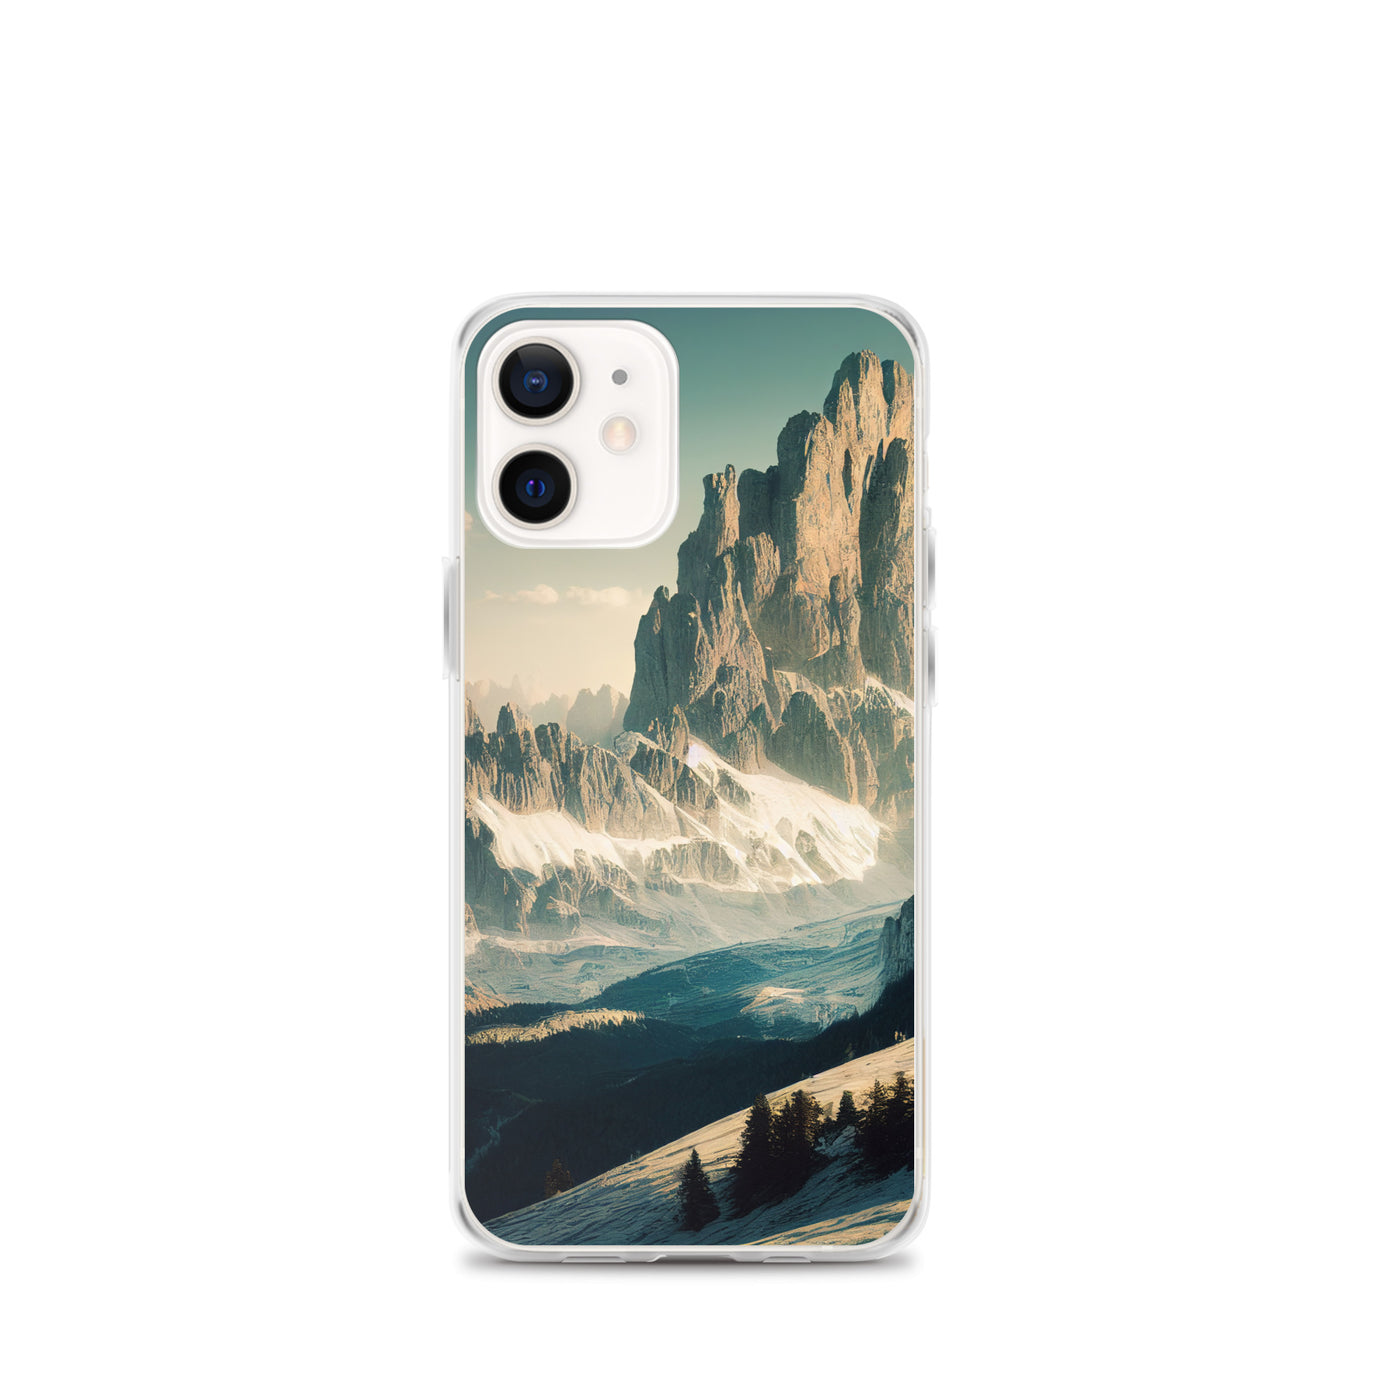 Dolomiten - Landschaftsmalerei - iPhone Schutzhülle (durchsichtig) berge xxx iPhone 12 mini